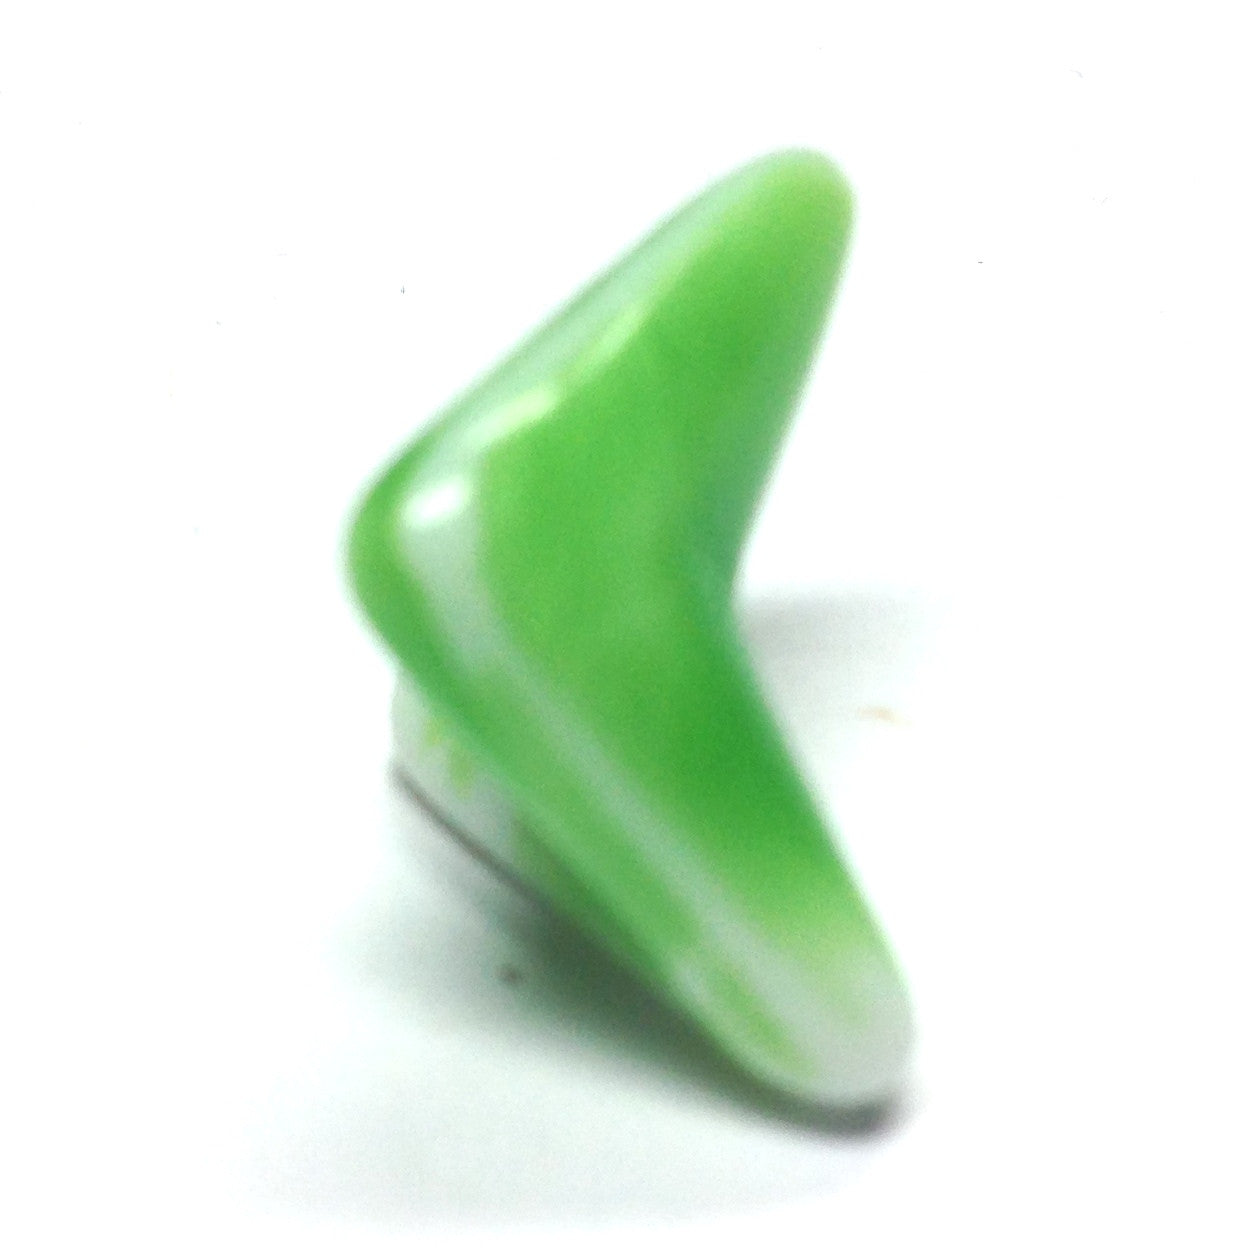 Green Glass Interlock Bead (36 pieces)